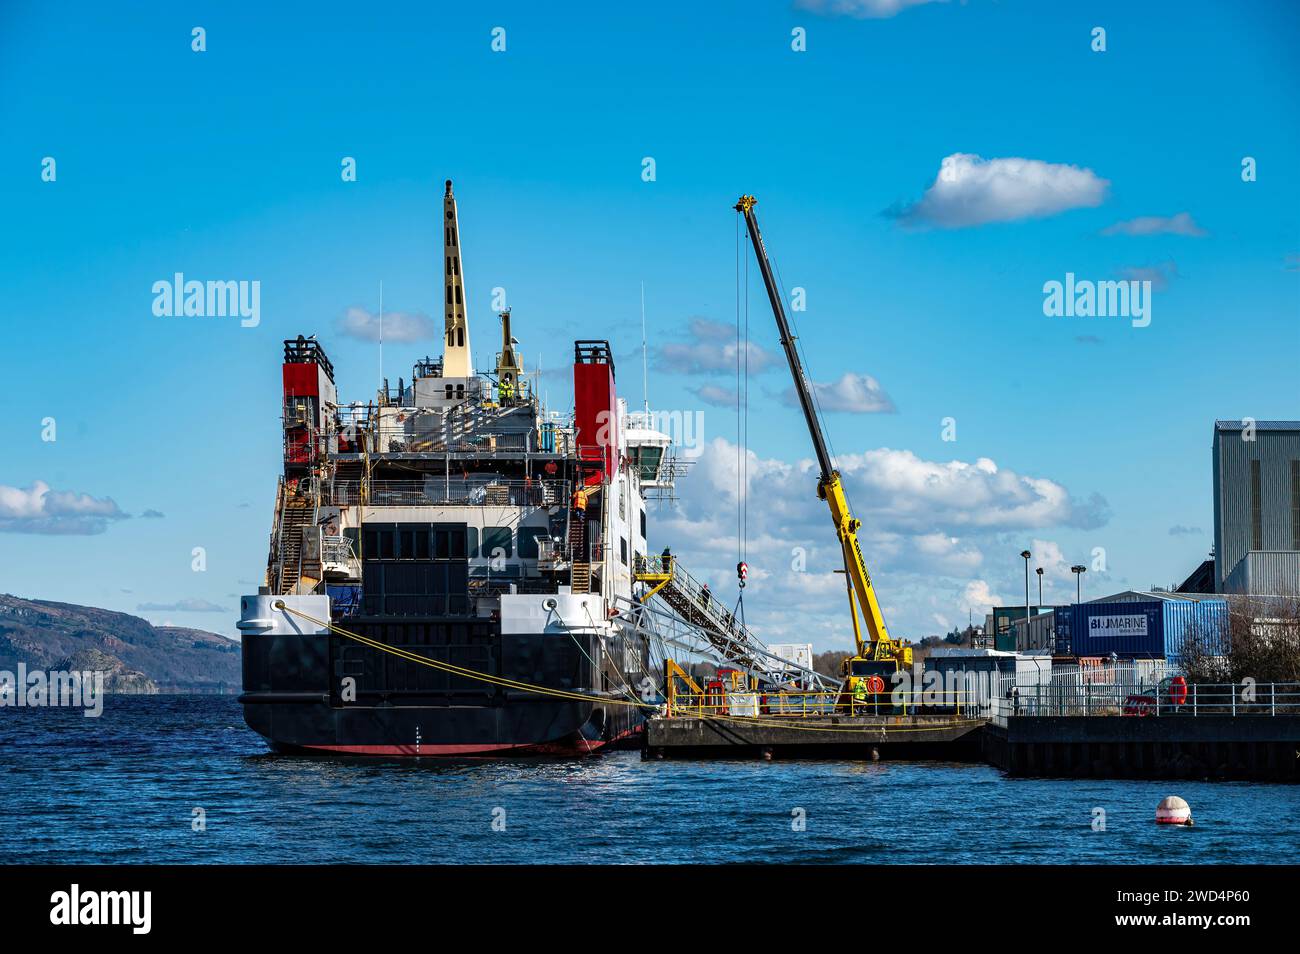 MV Glen Sannox Ferry under construction at Port Glasgow Shipyard. Stock Photo